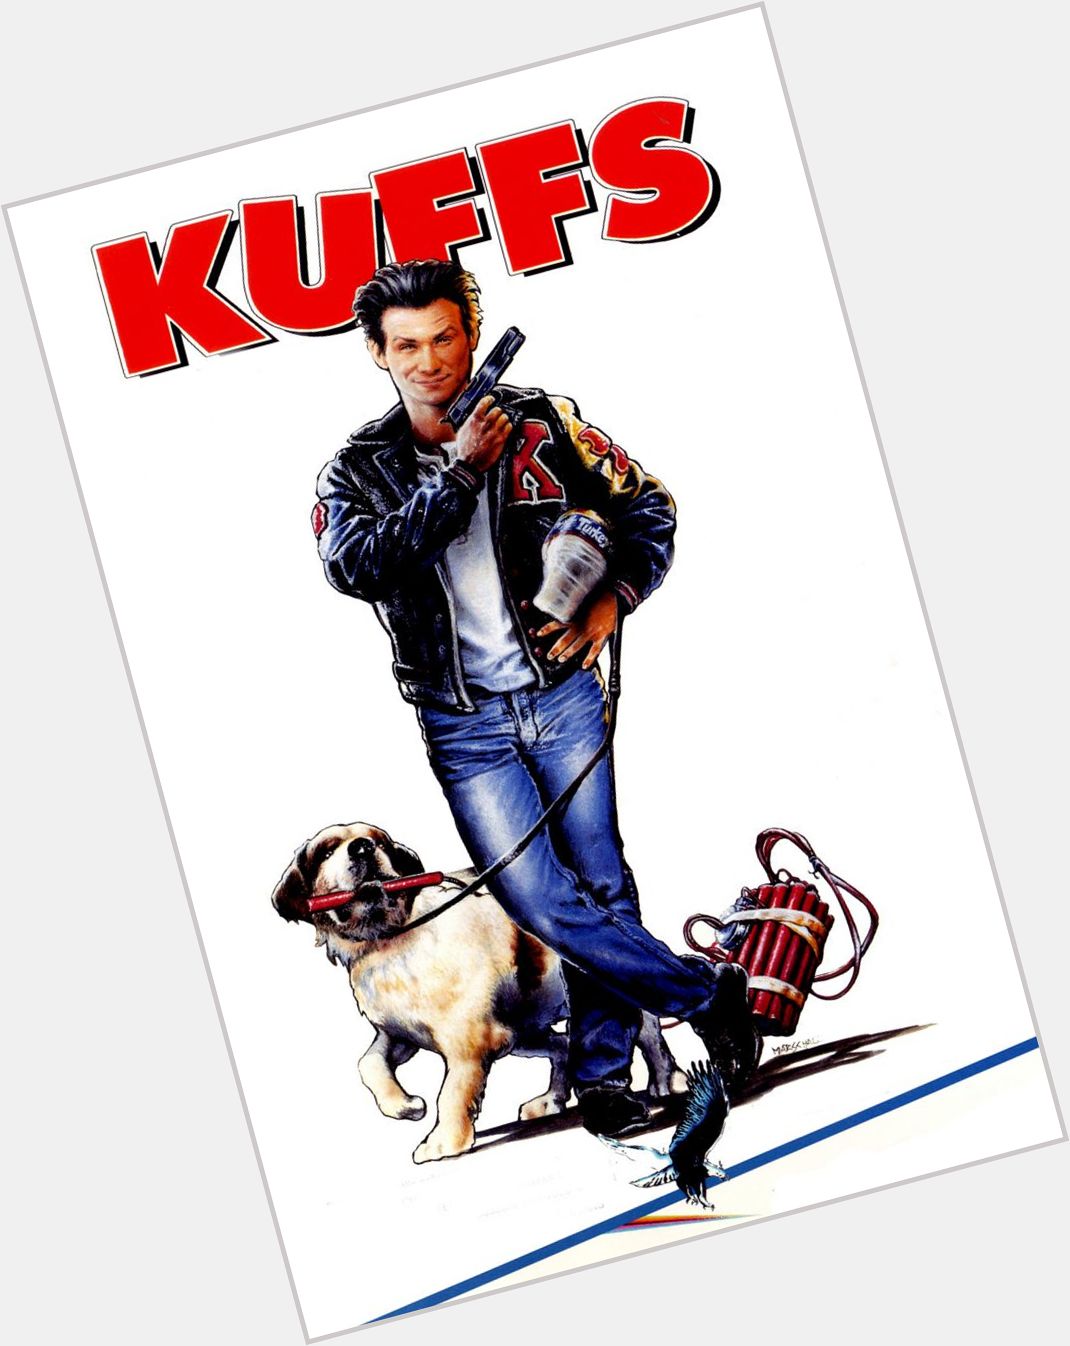 Kuffs  (1992)
Happy Birthday, Christian Slater! 